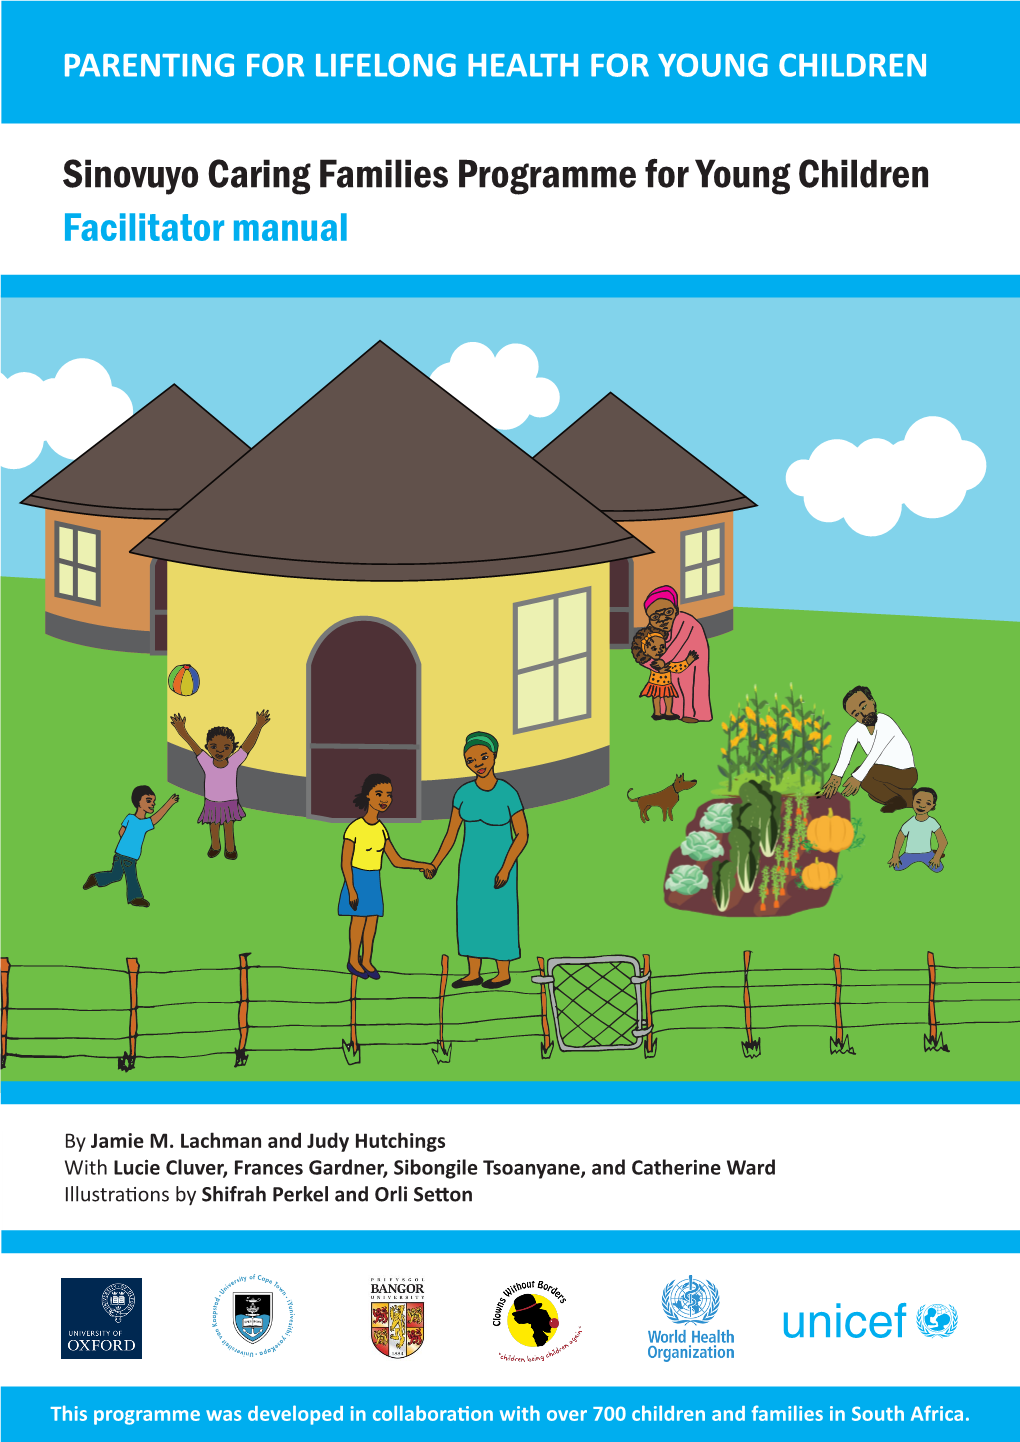 Sinovuyo Caring Families Programme for Young Children Facilitator Manual